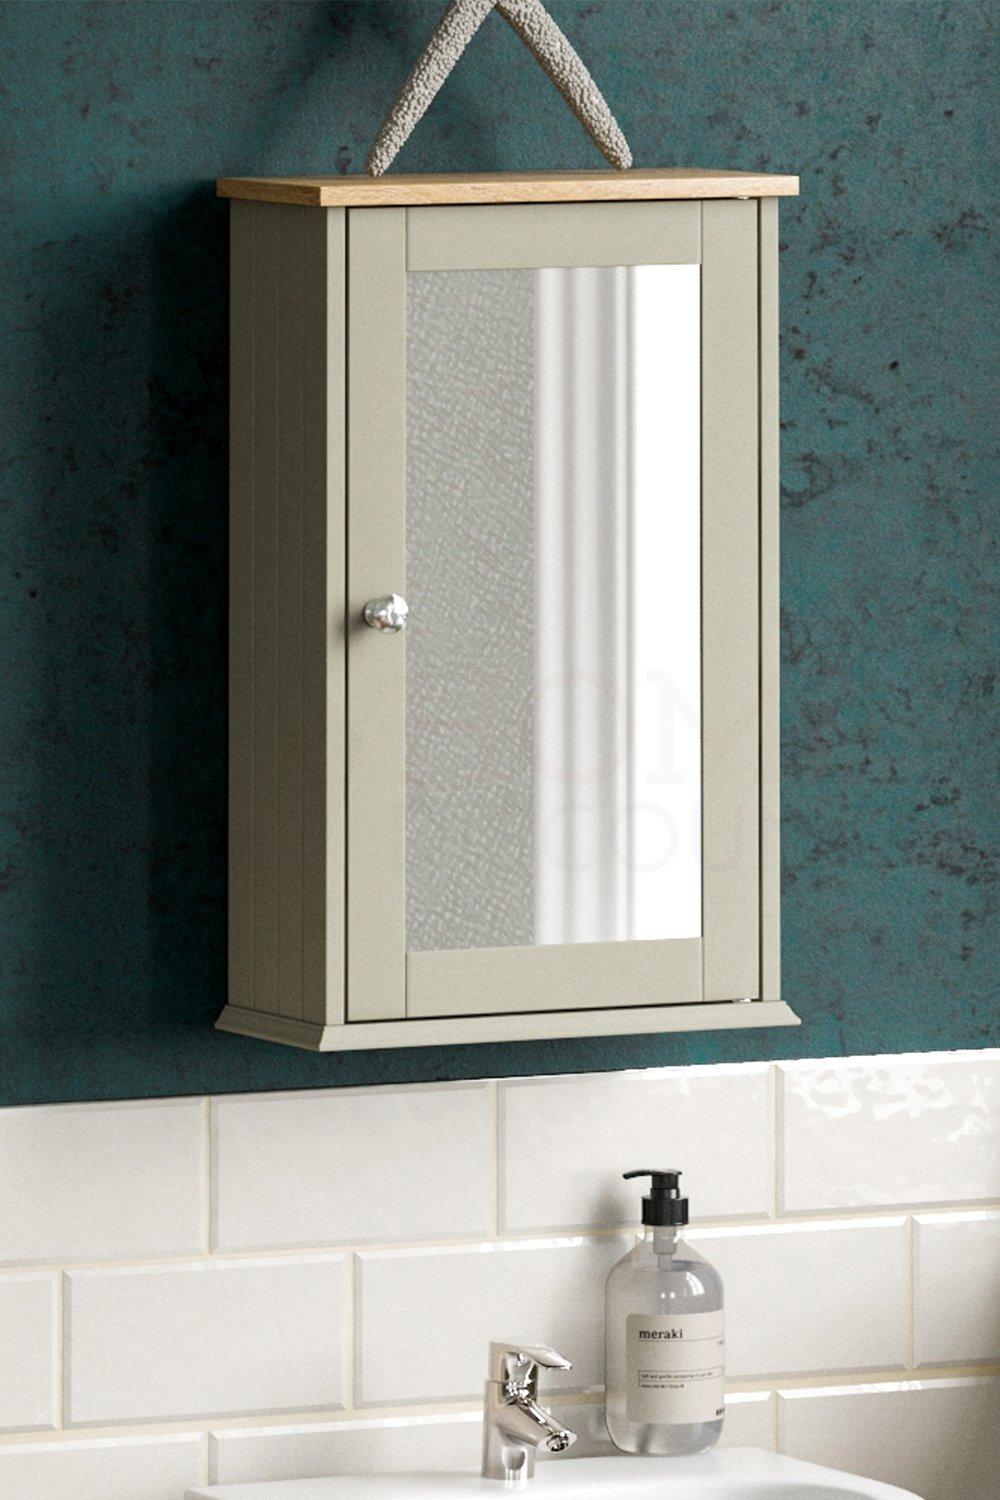 Bath Vida Priano 1 Door Mirrored Wall Cabinet With Shelf Storage Bathroom Furniture 530 x 340 x 150 